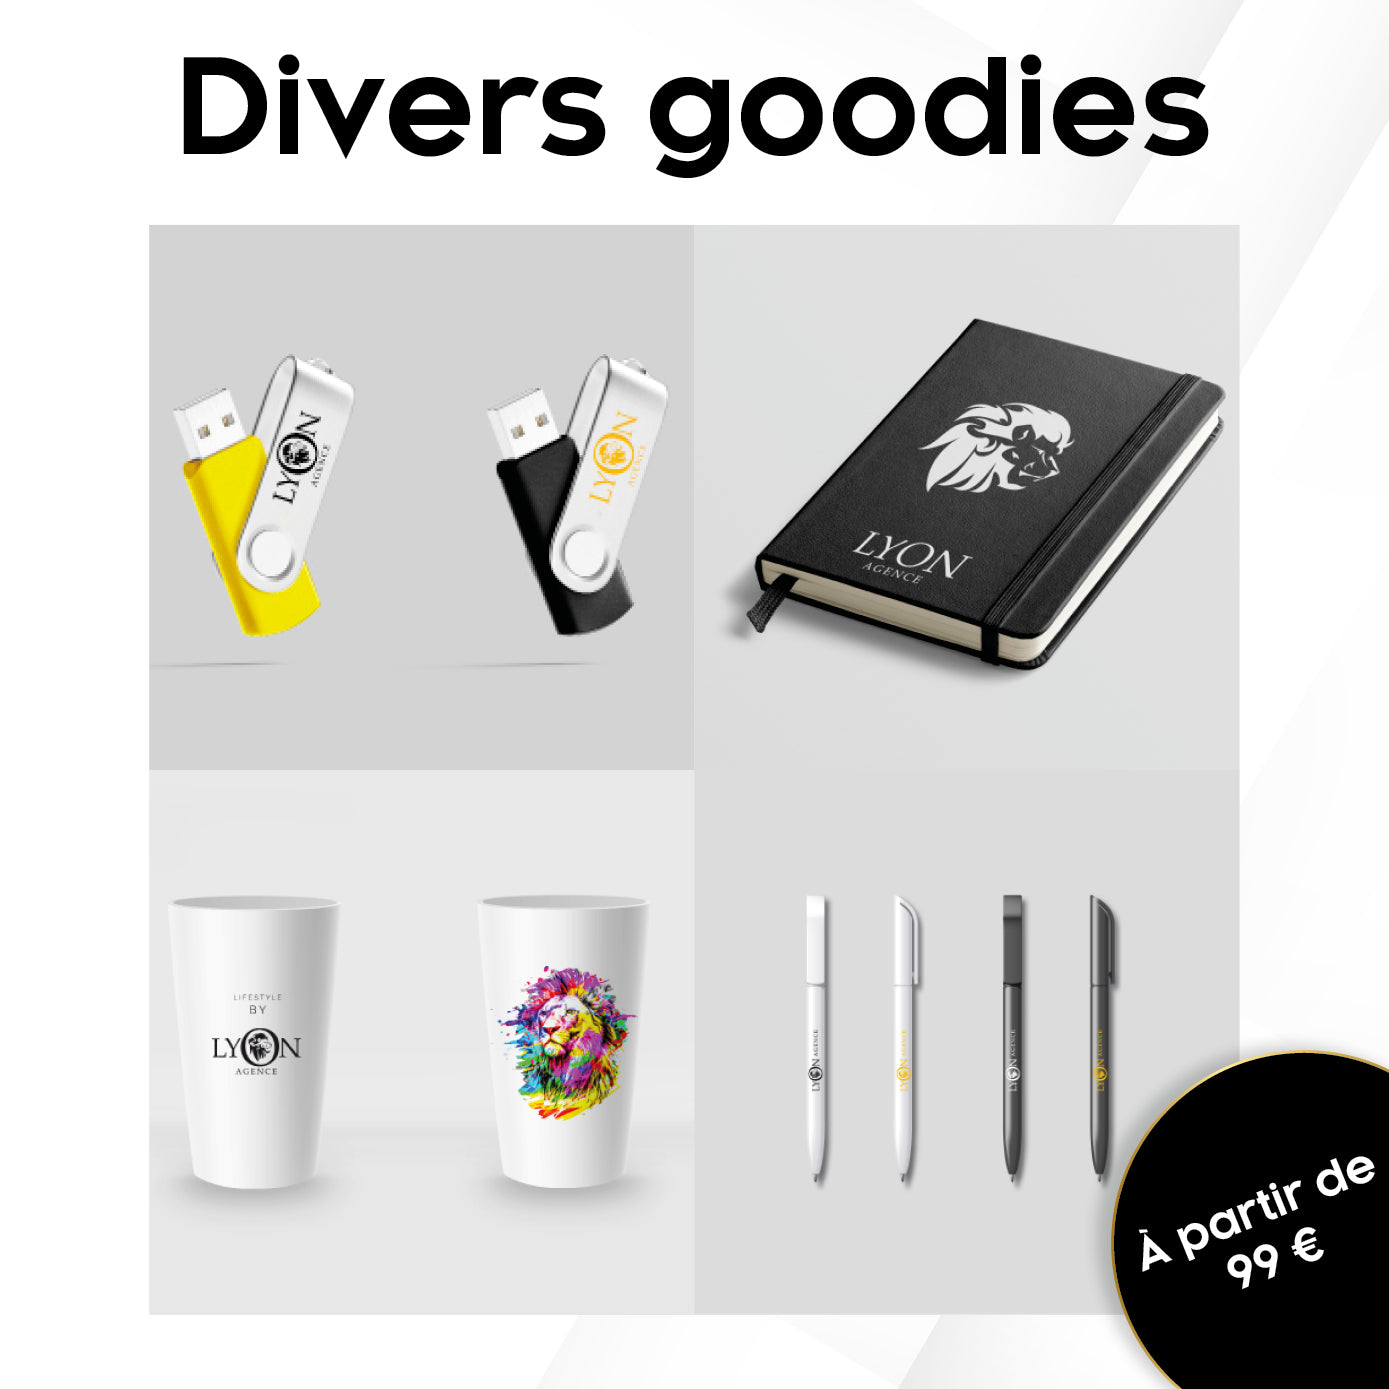 Divers goodies